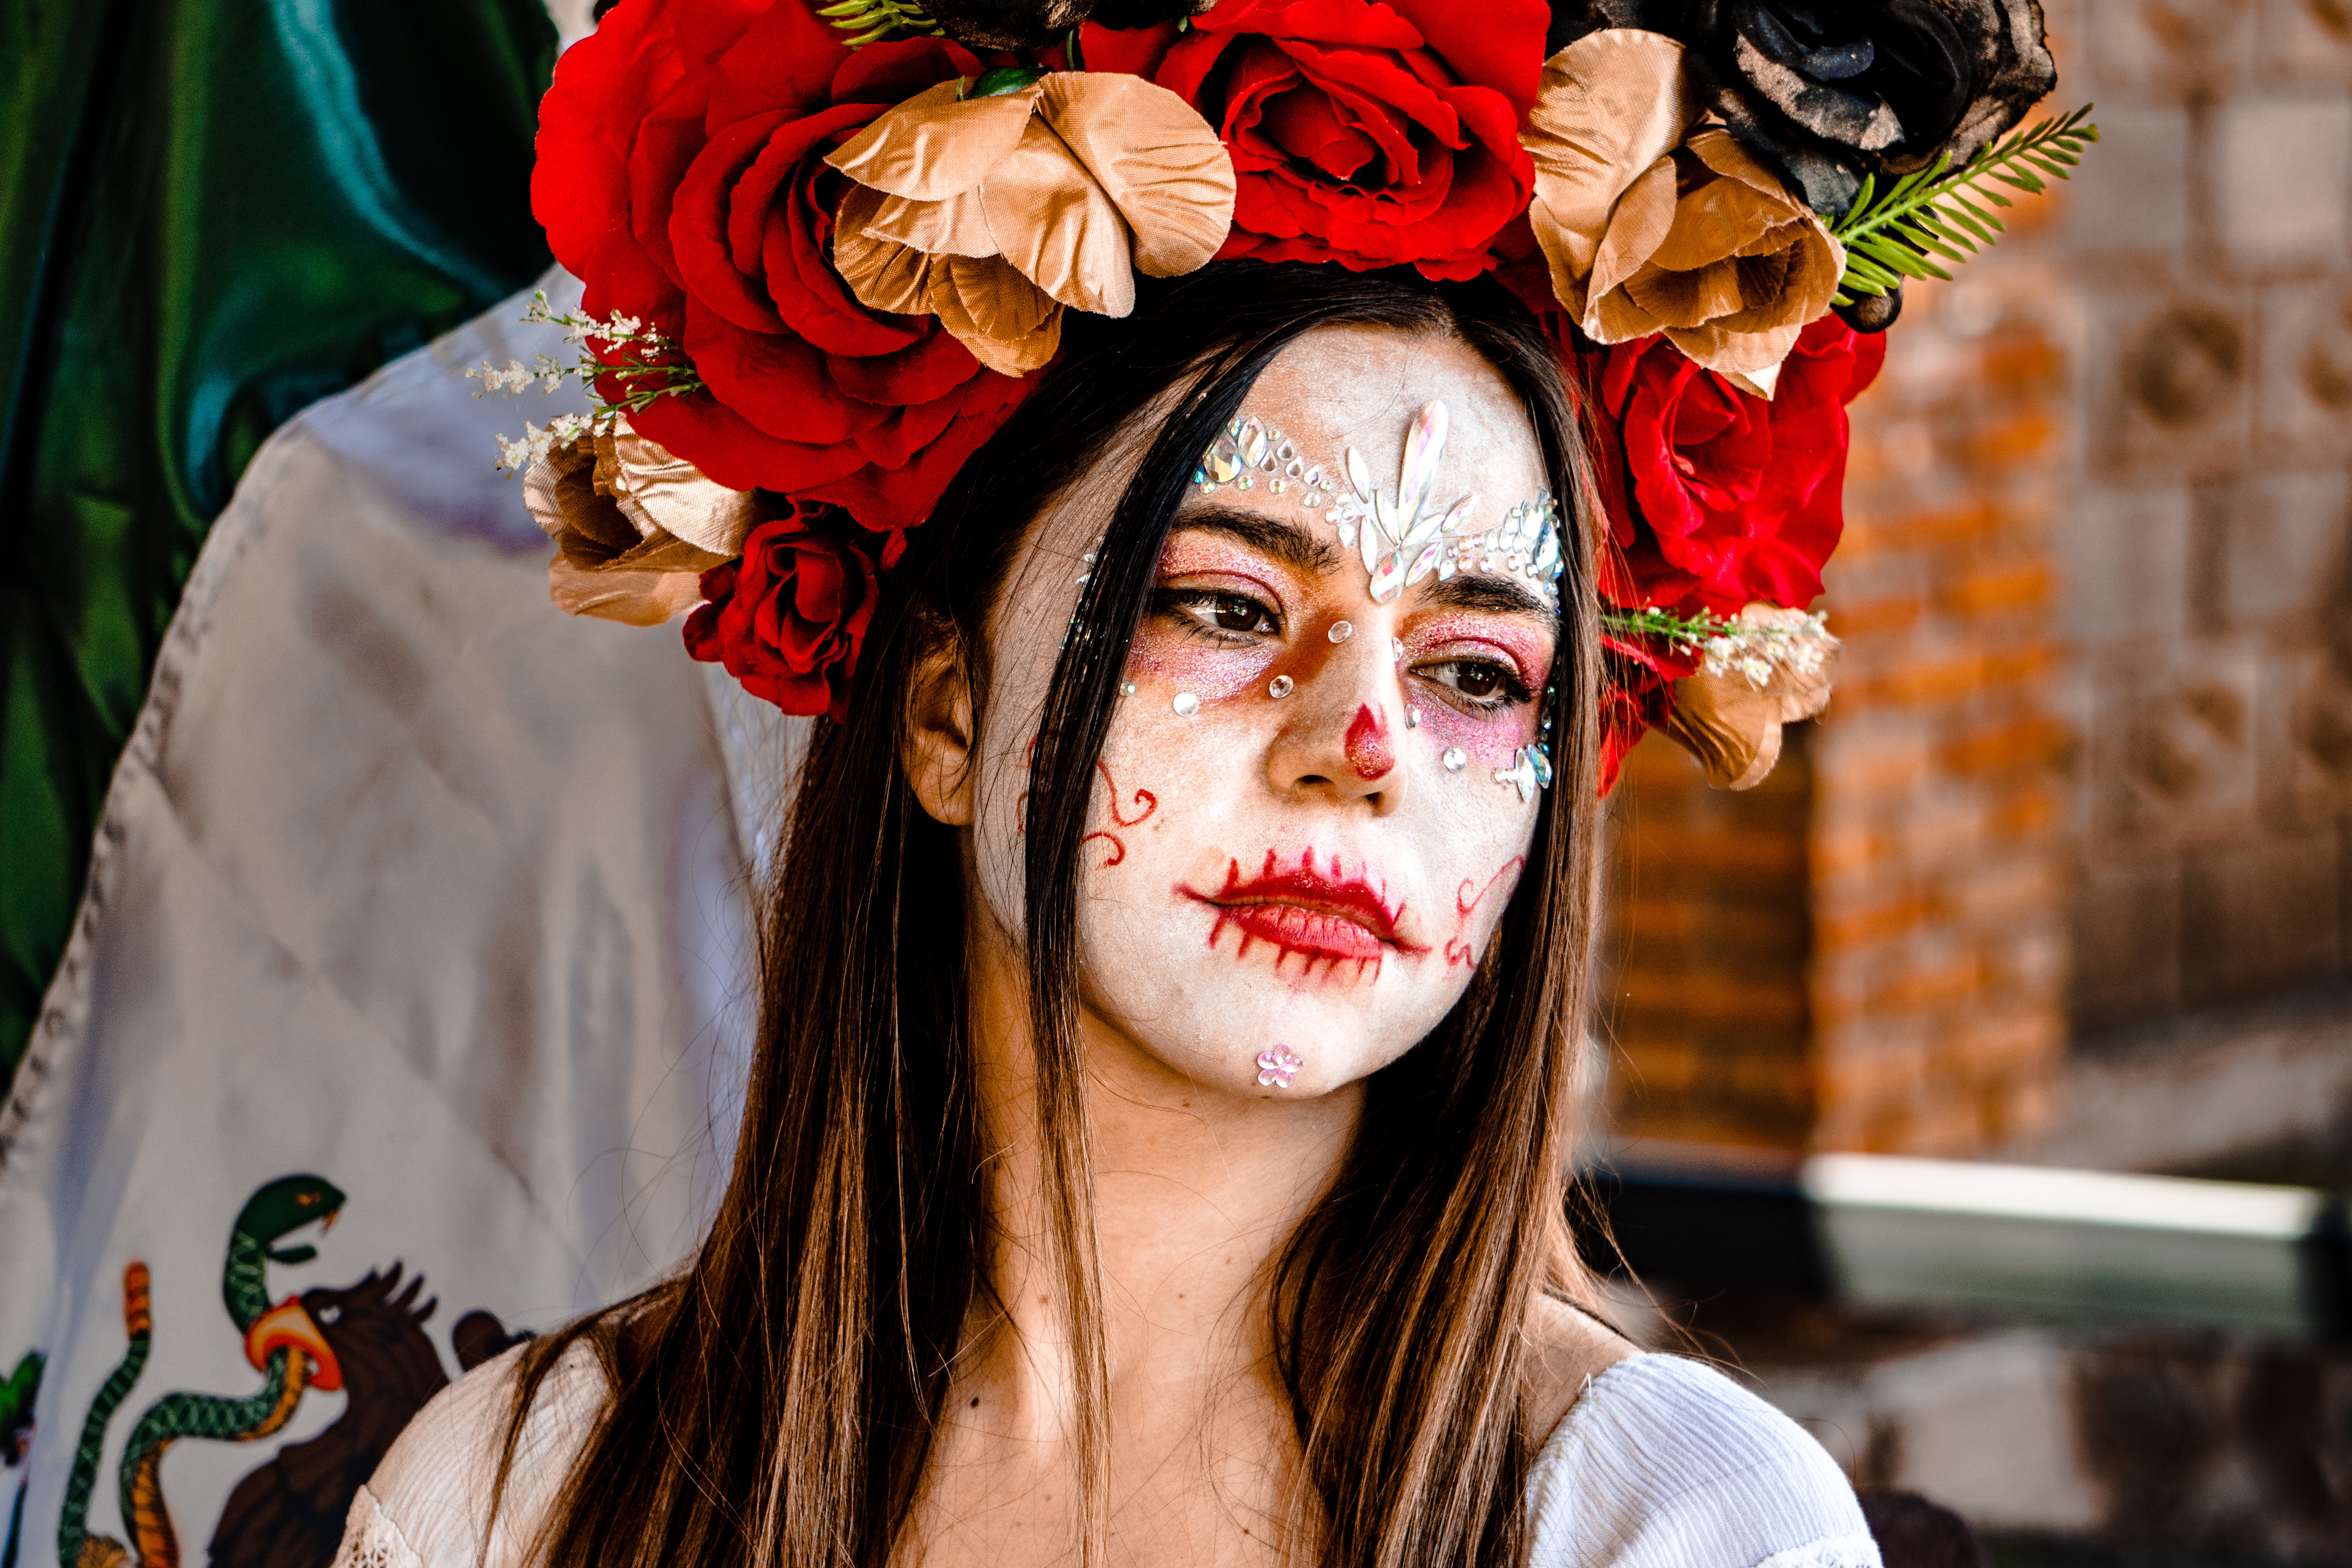 Girl in sugar skull makeup by heber vazquez on pexels